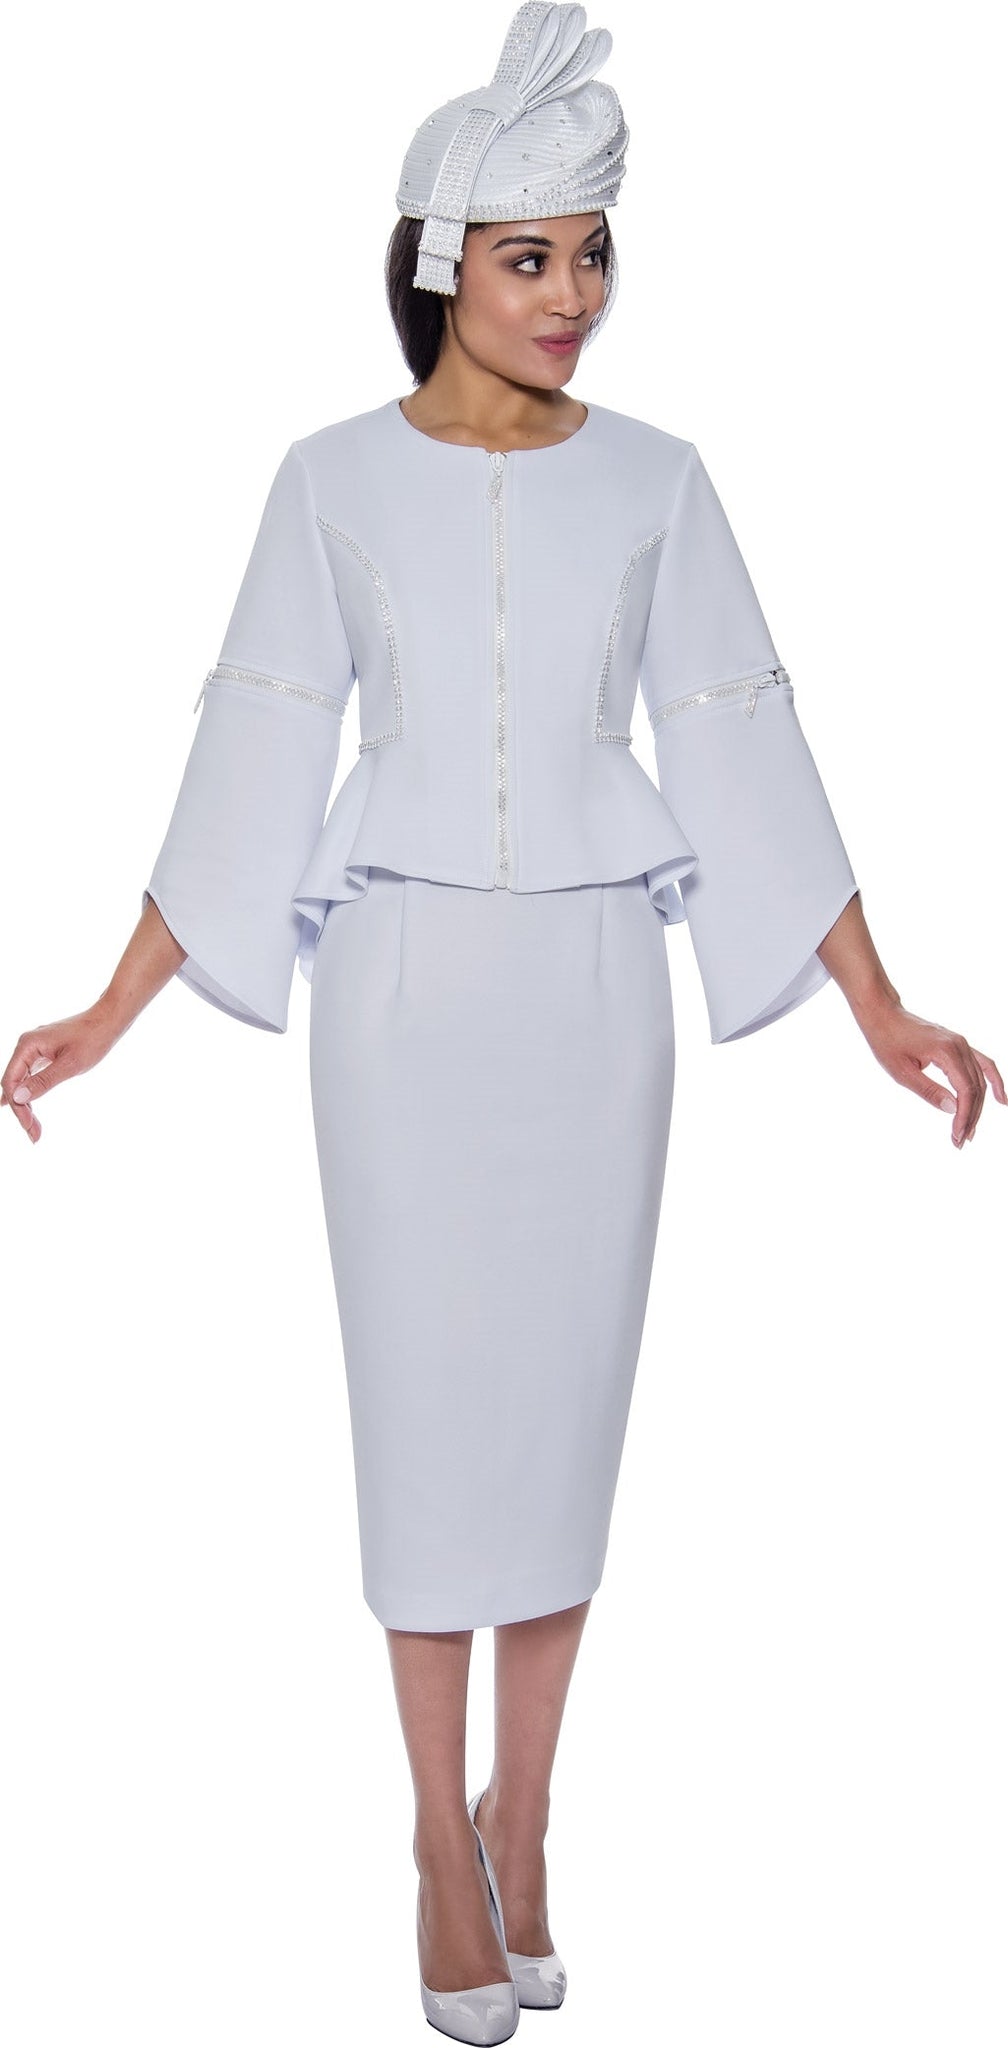 GMI Church Suit 9562C-White - Church Suits For Less